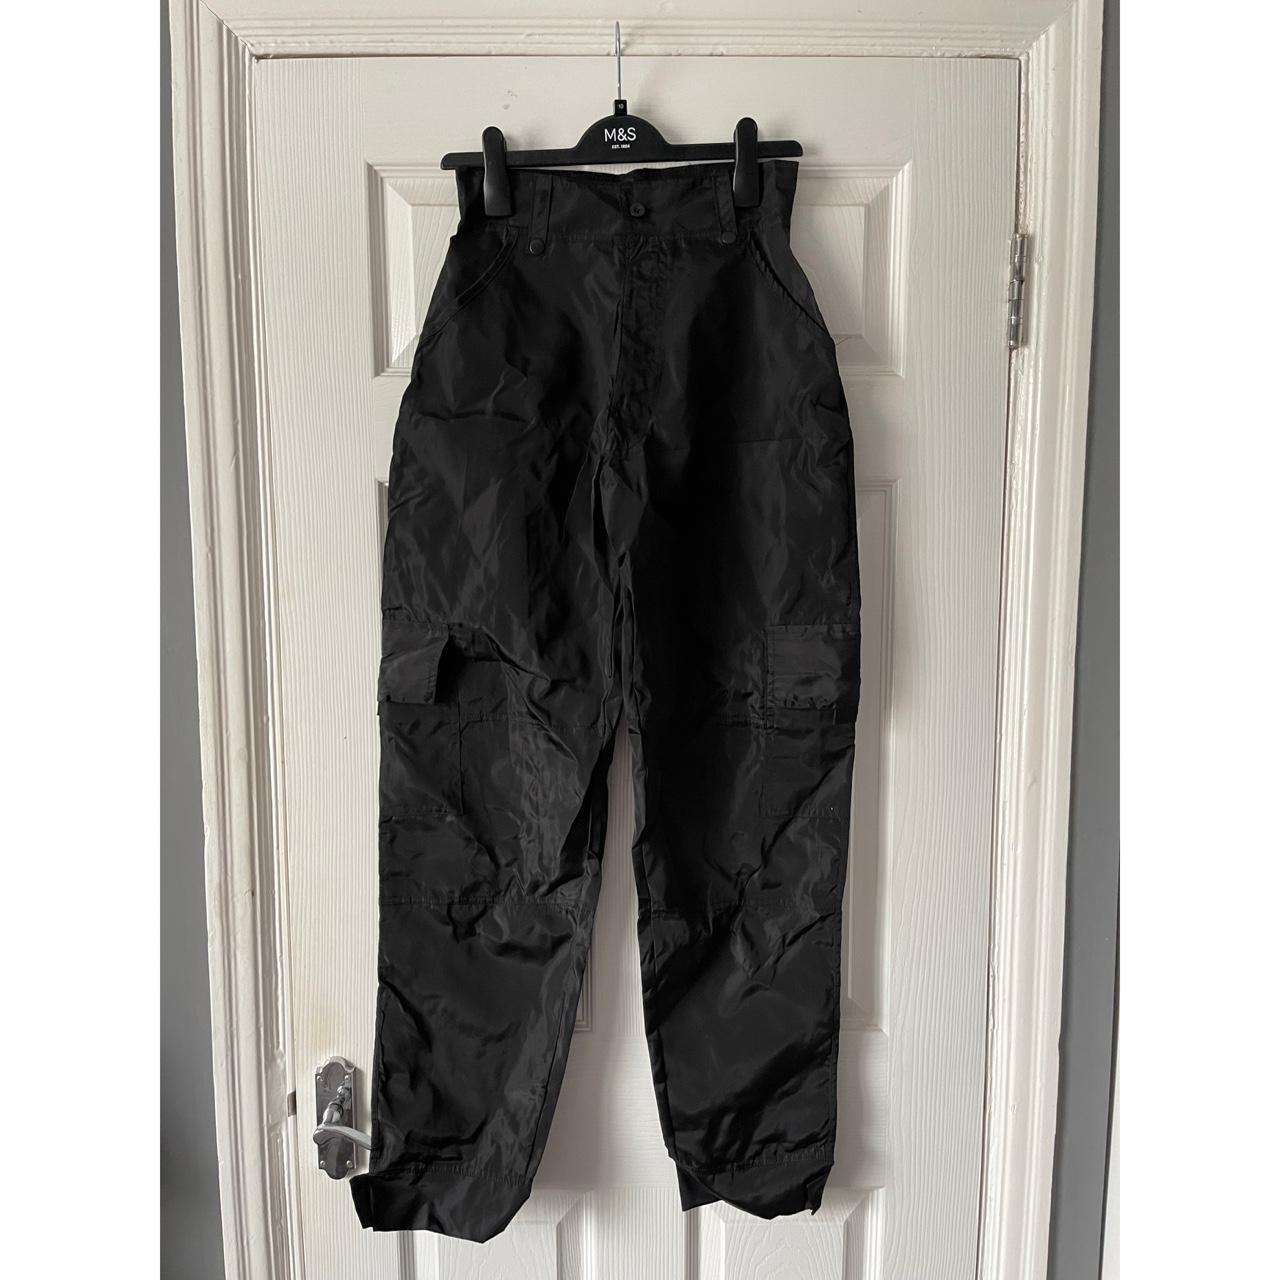 Black waterproof cargo trousers #cargo #waterproof... - Depop